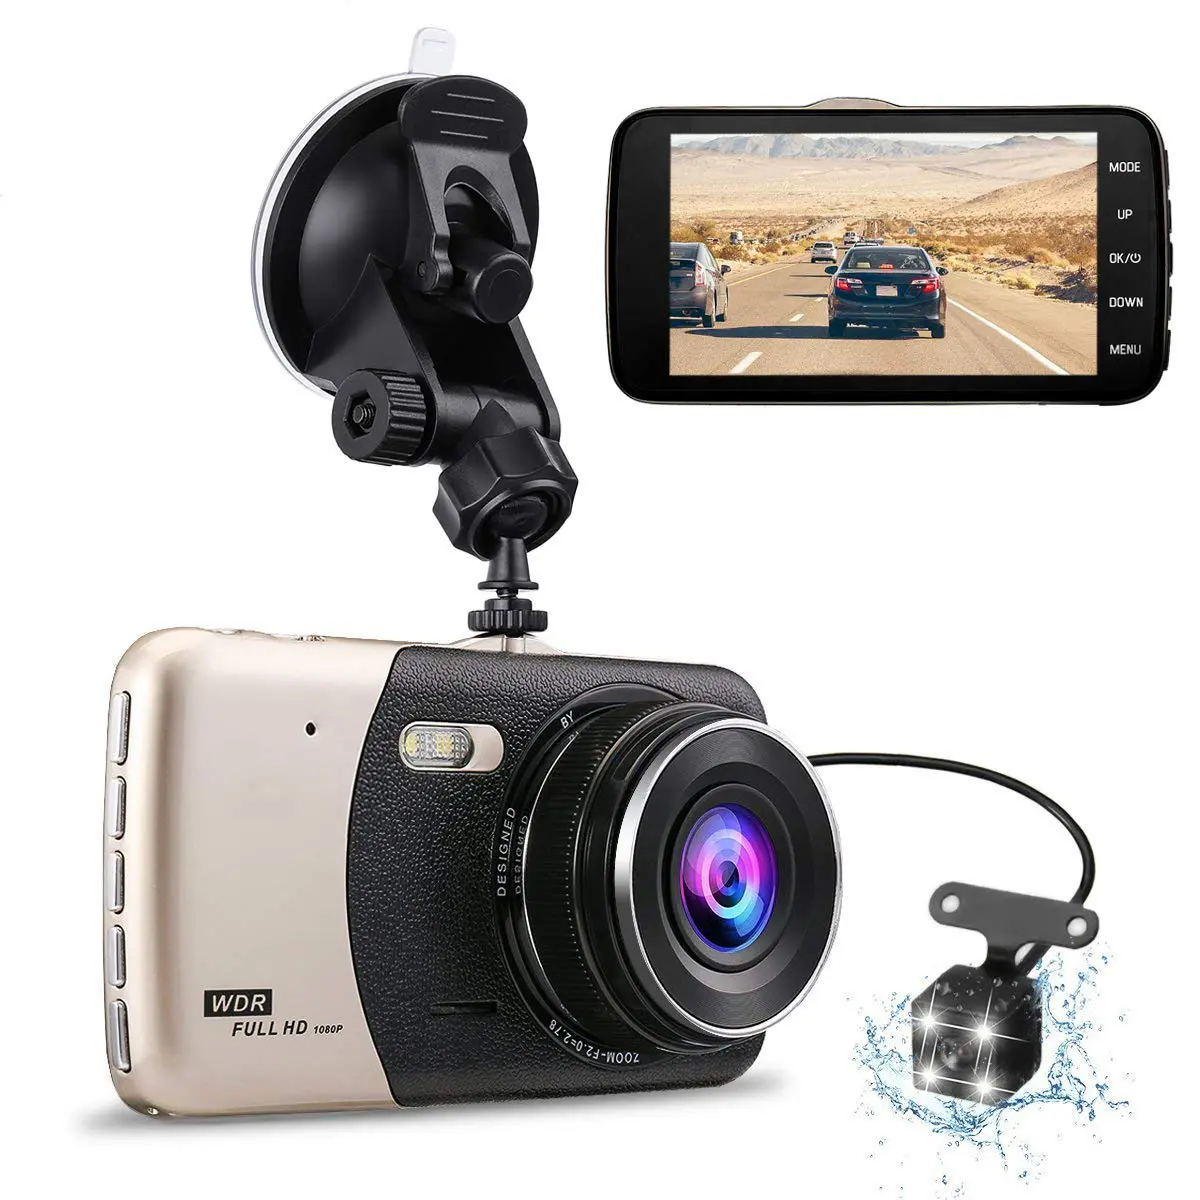 4.0In IPS سيارة بعدسة مزدوجة كاميرا السيارات DVR كاميرا السيارات 24H وقوف السيارات مسجل فيديو داش كاميرا كامل HD 1080p صندوق أسود Dvr سيارة كاميرا